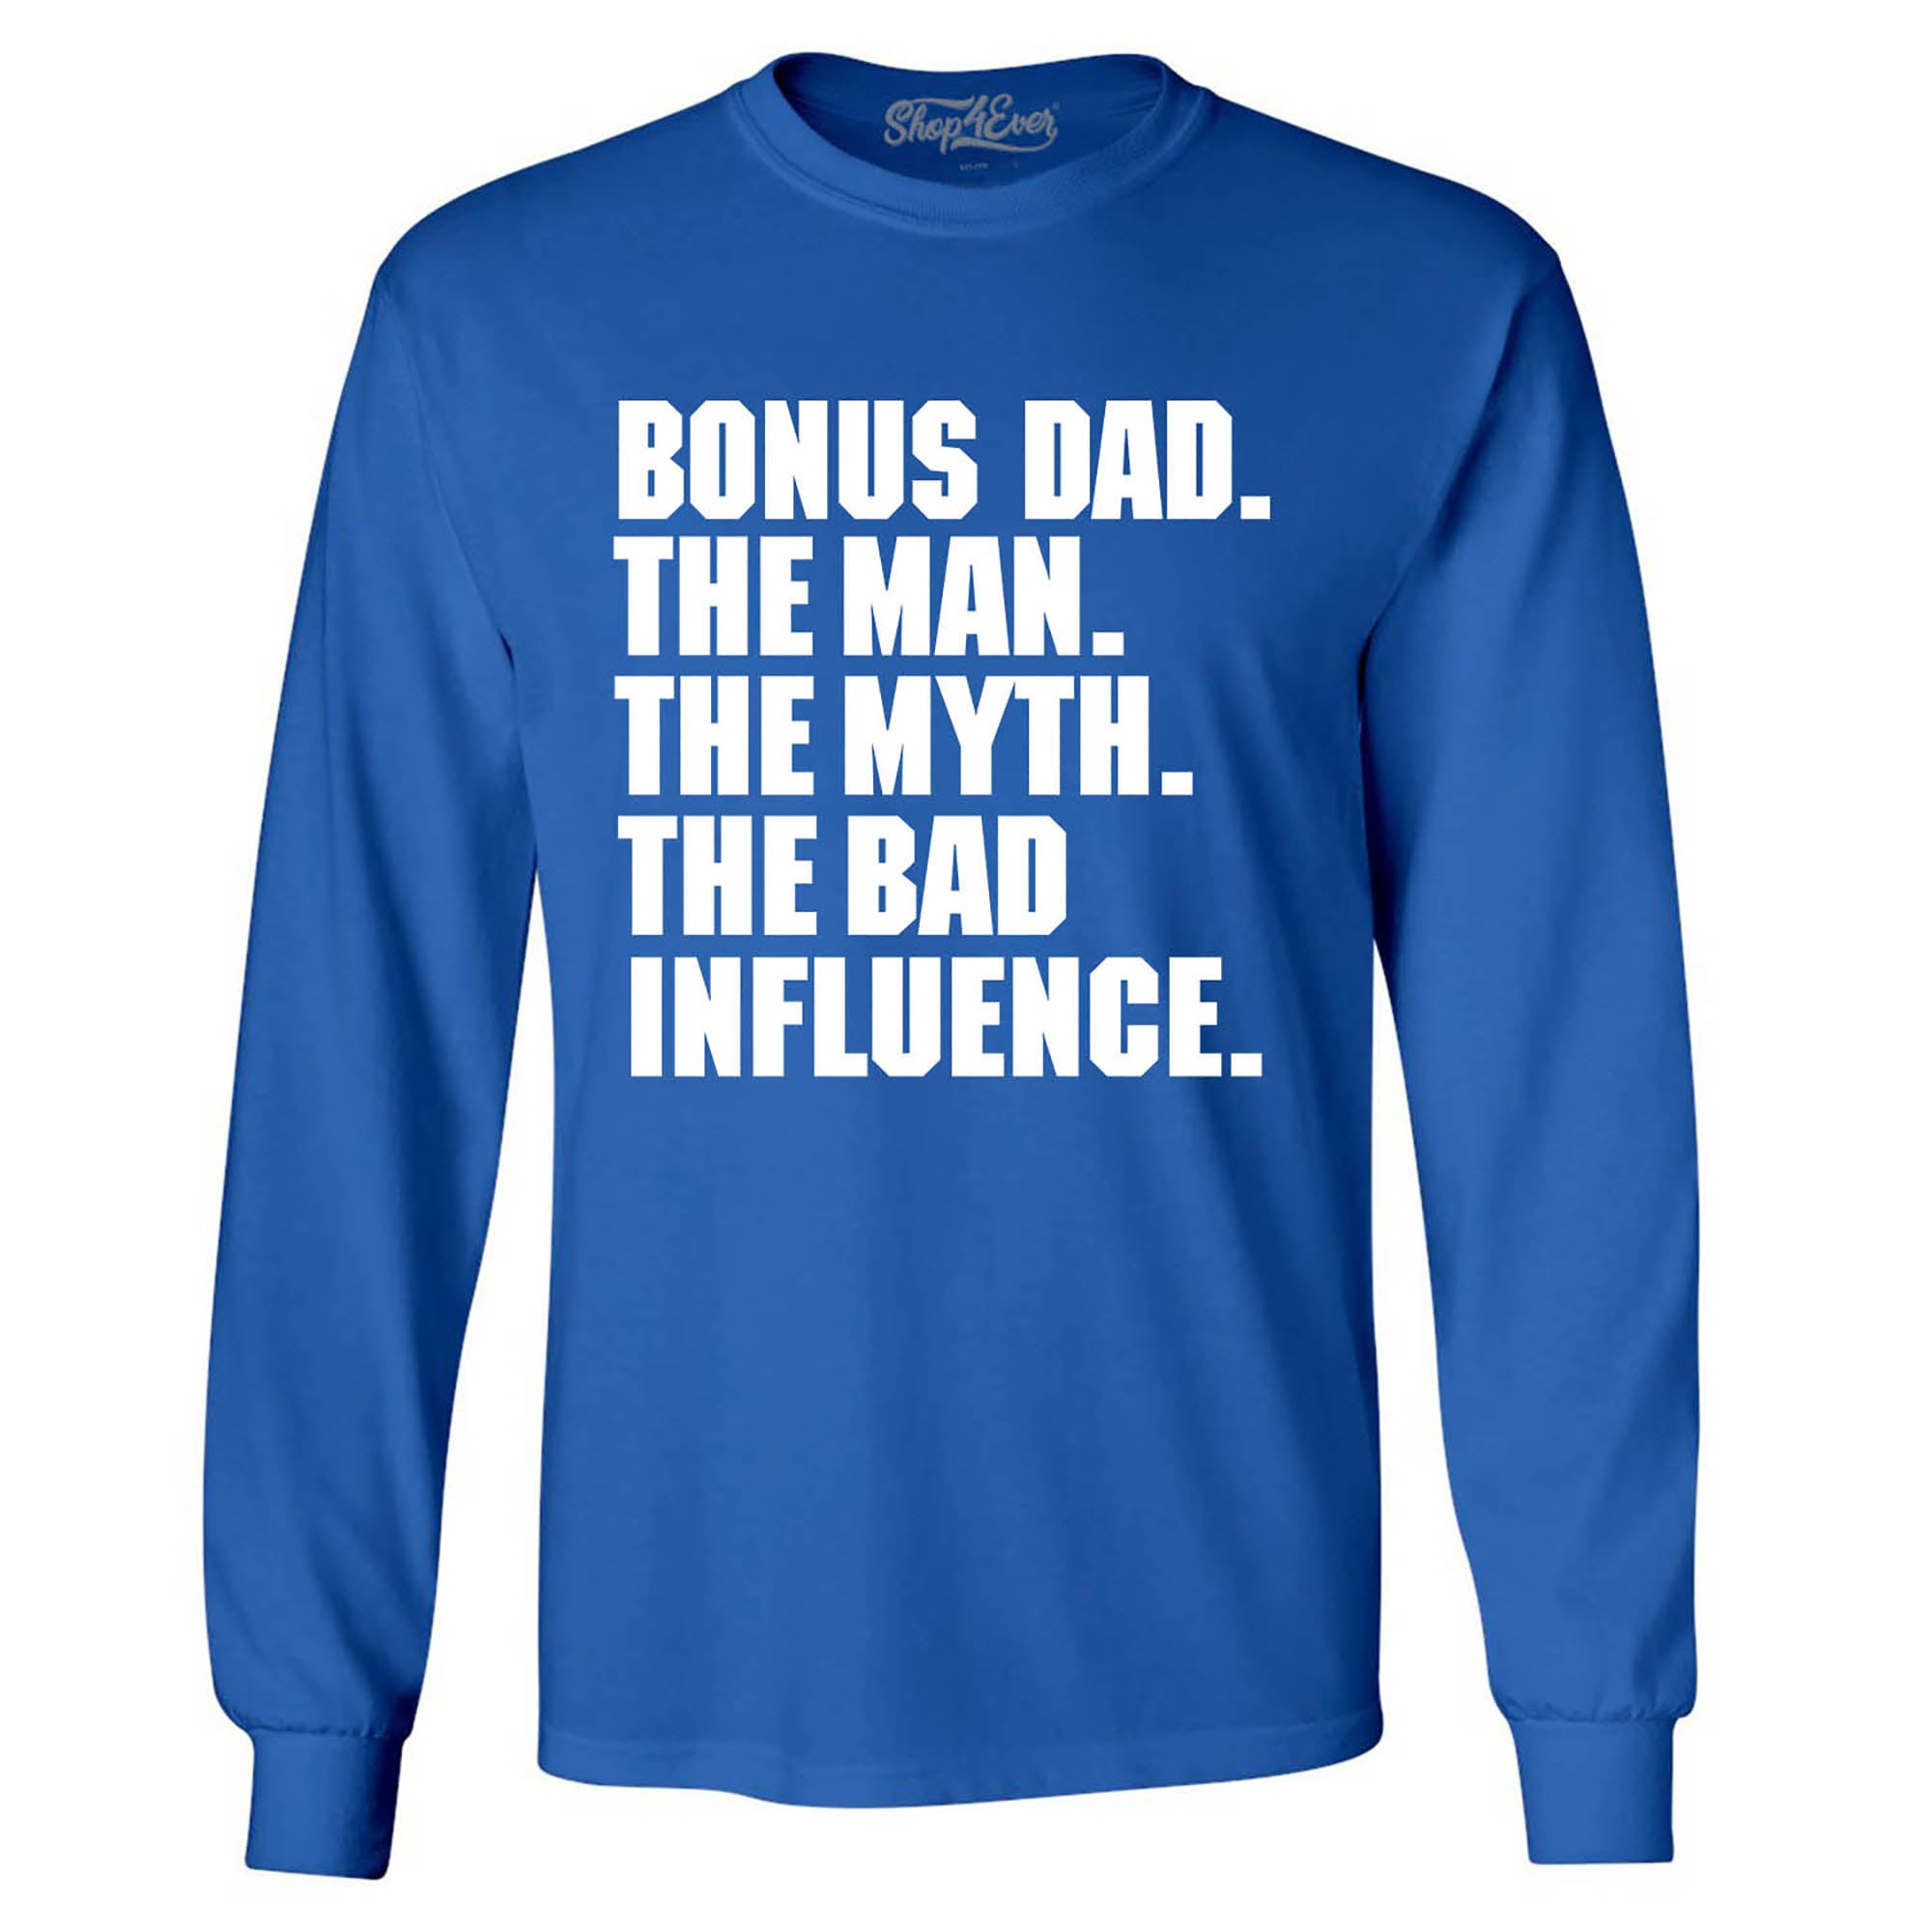 Bonus Dad The Man The Myth The Bad Influence Long Sleeve Shirt